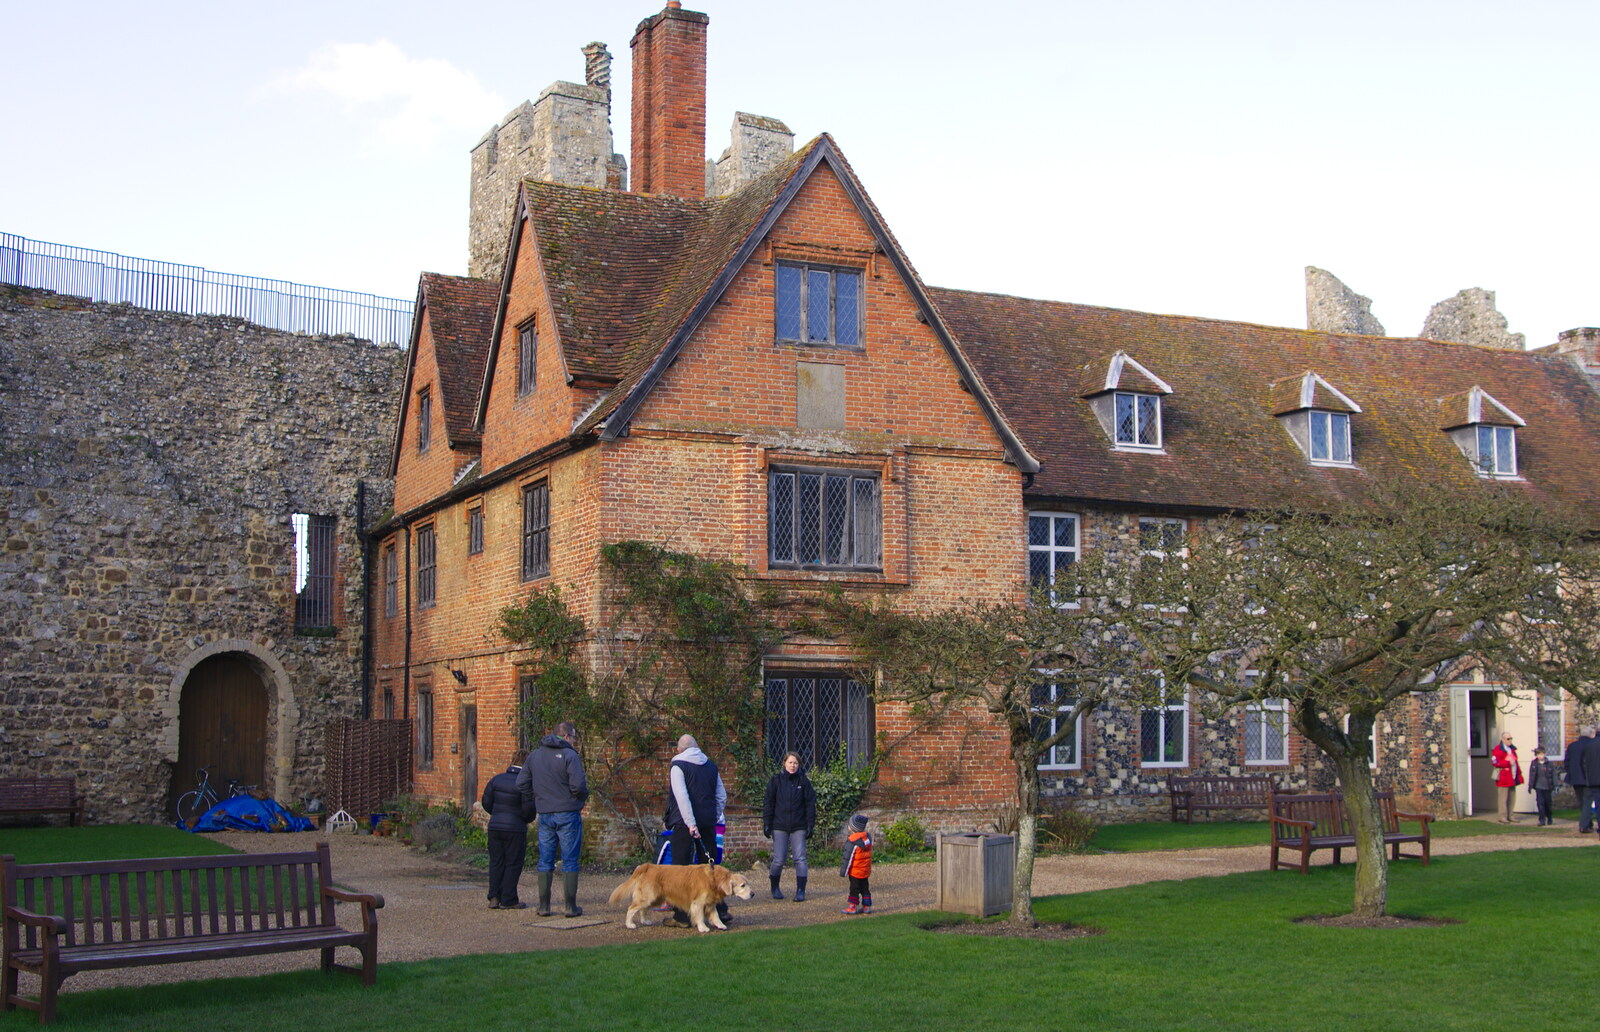 The Elizabethan house from A Trip to Framlingham Castle, Framlingham, Suffolk - 16th February 2014